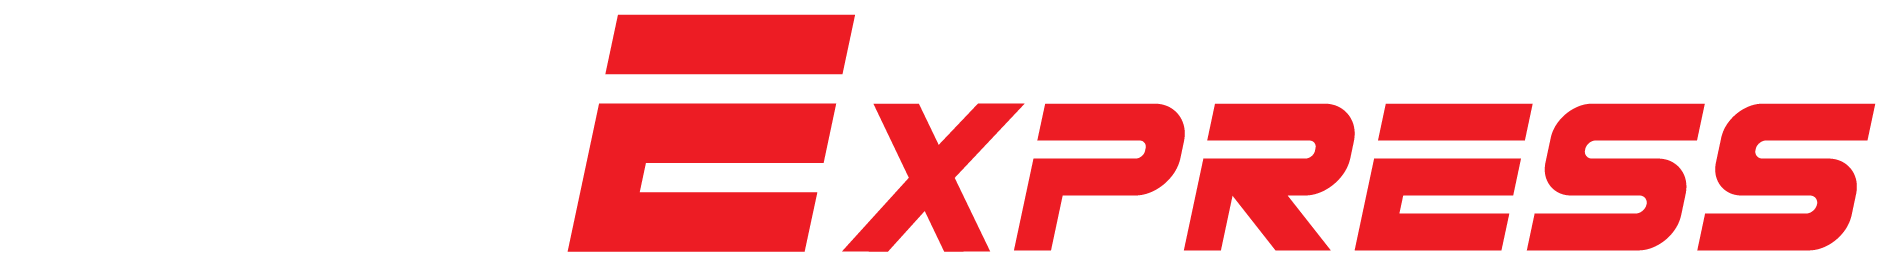 RCExpress Logo